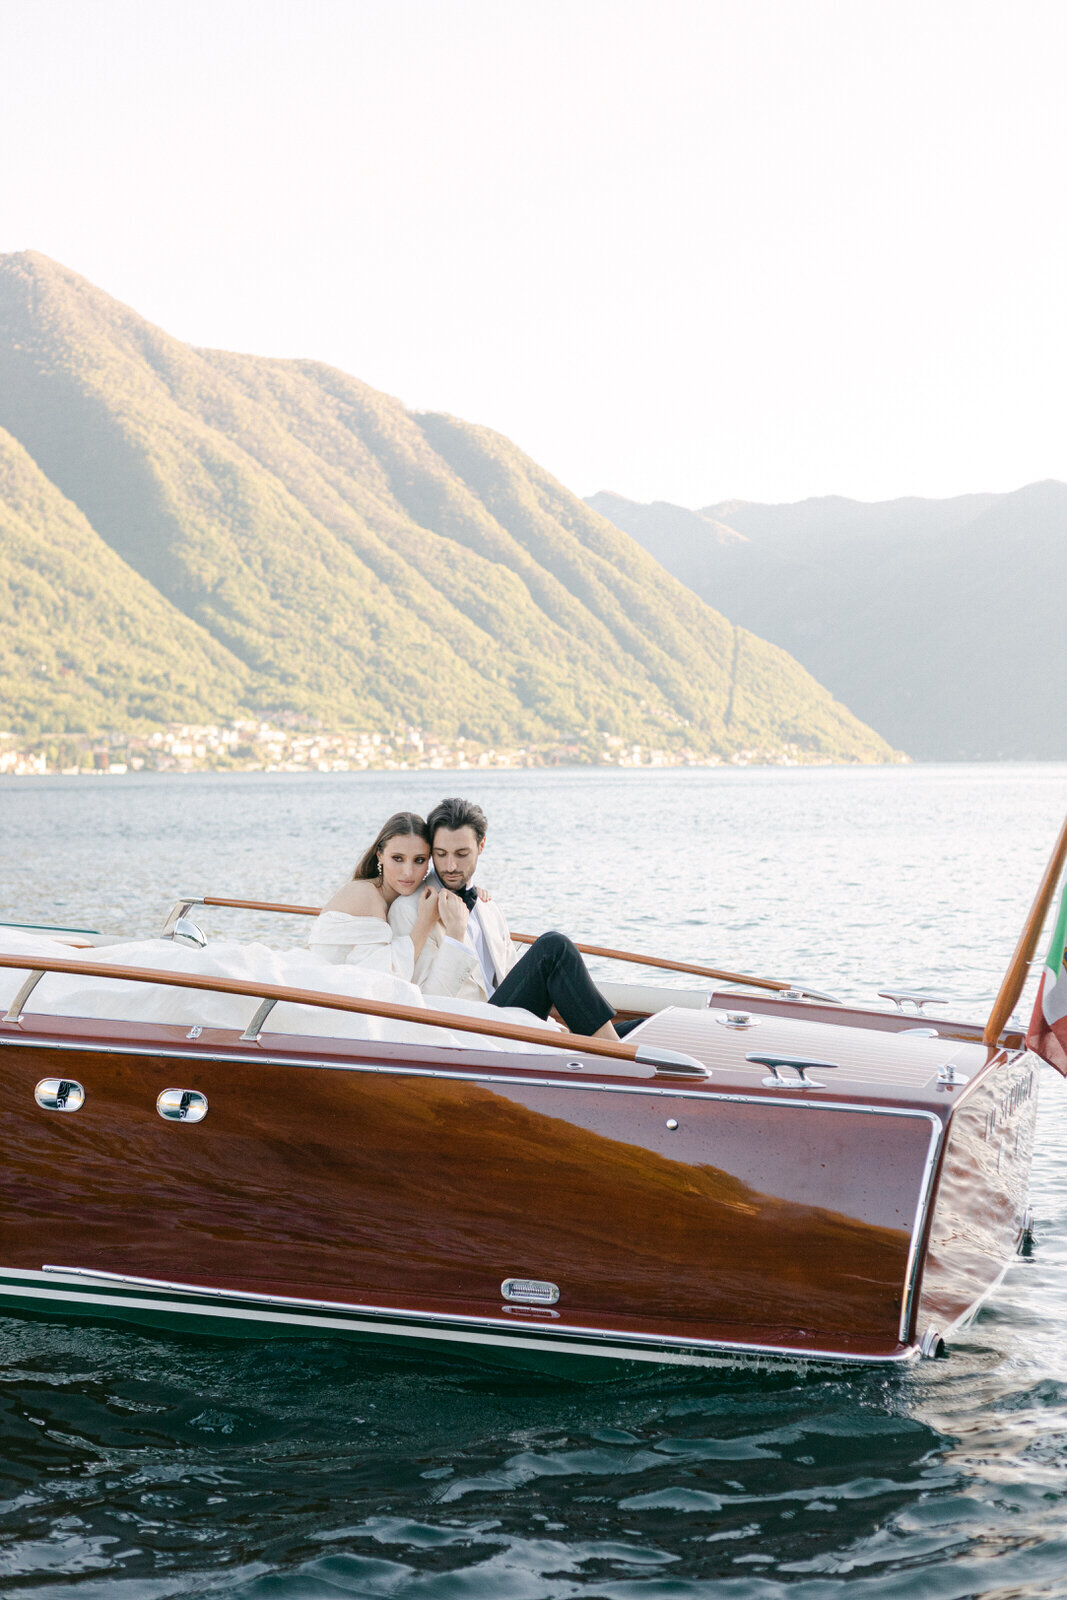 wedding couple boat ride on a wooden Cadenazzi in Lake Como